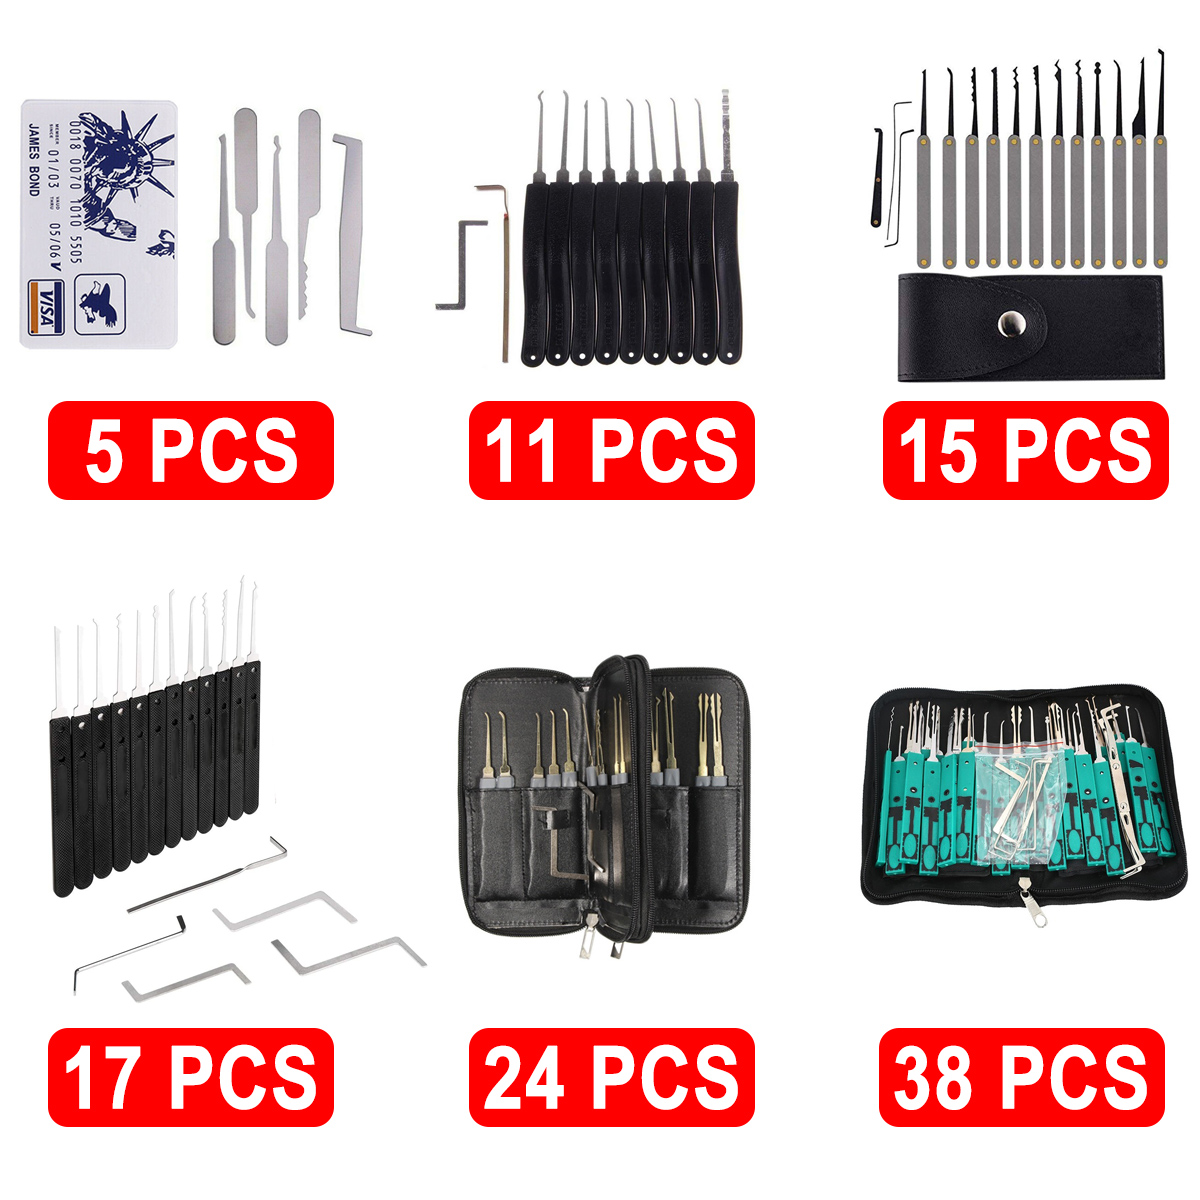 Padlock-Pick-Set-For-Locksmith-Training-38241715115pcs-Lock-Pick-Practice-Tools-Hooks-Set-1816061-1